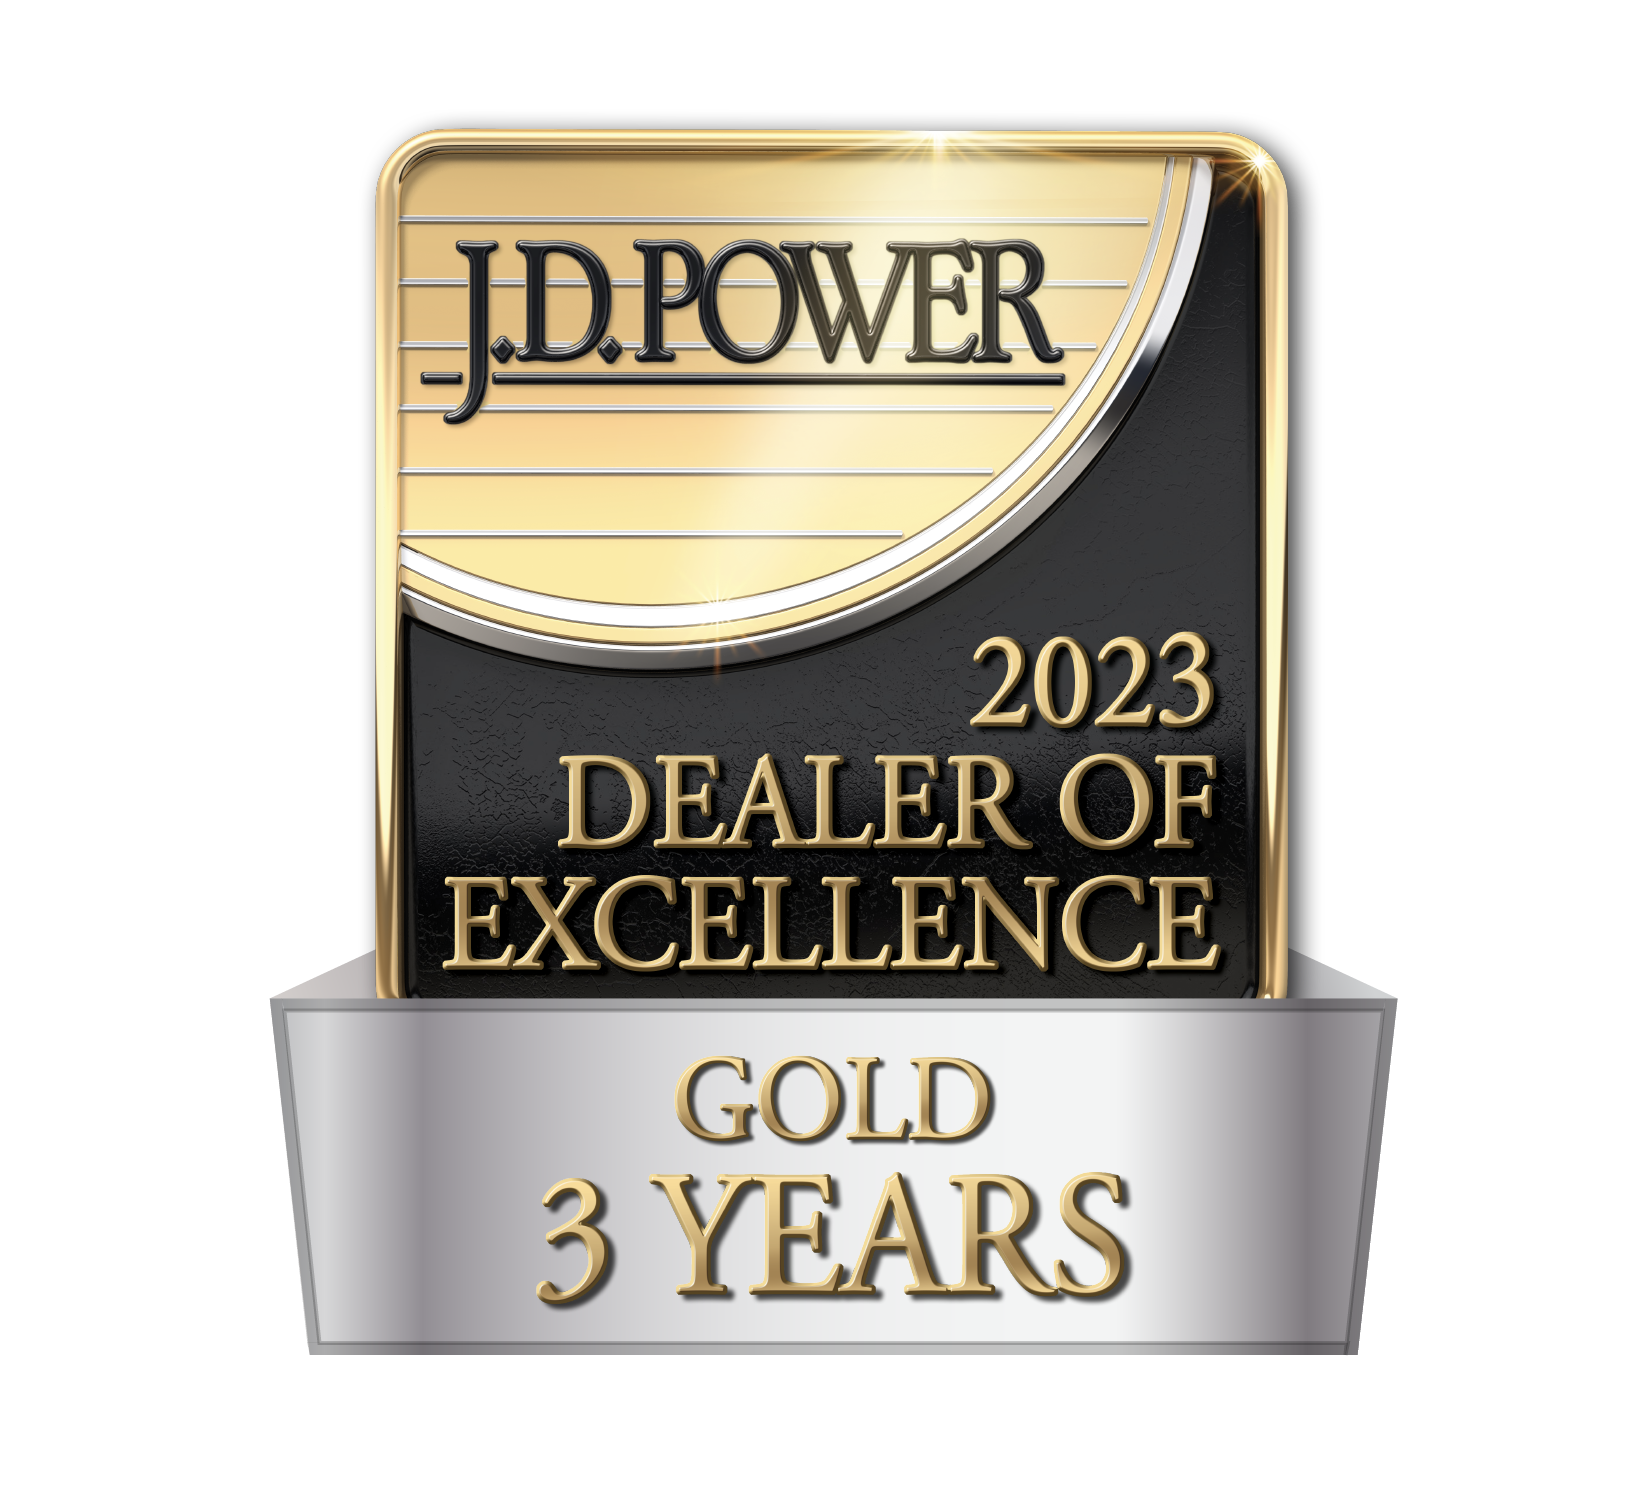 J.D. Power Dealership of Excellence Award